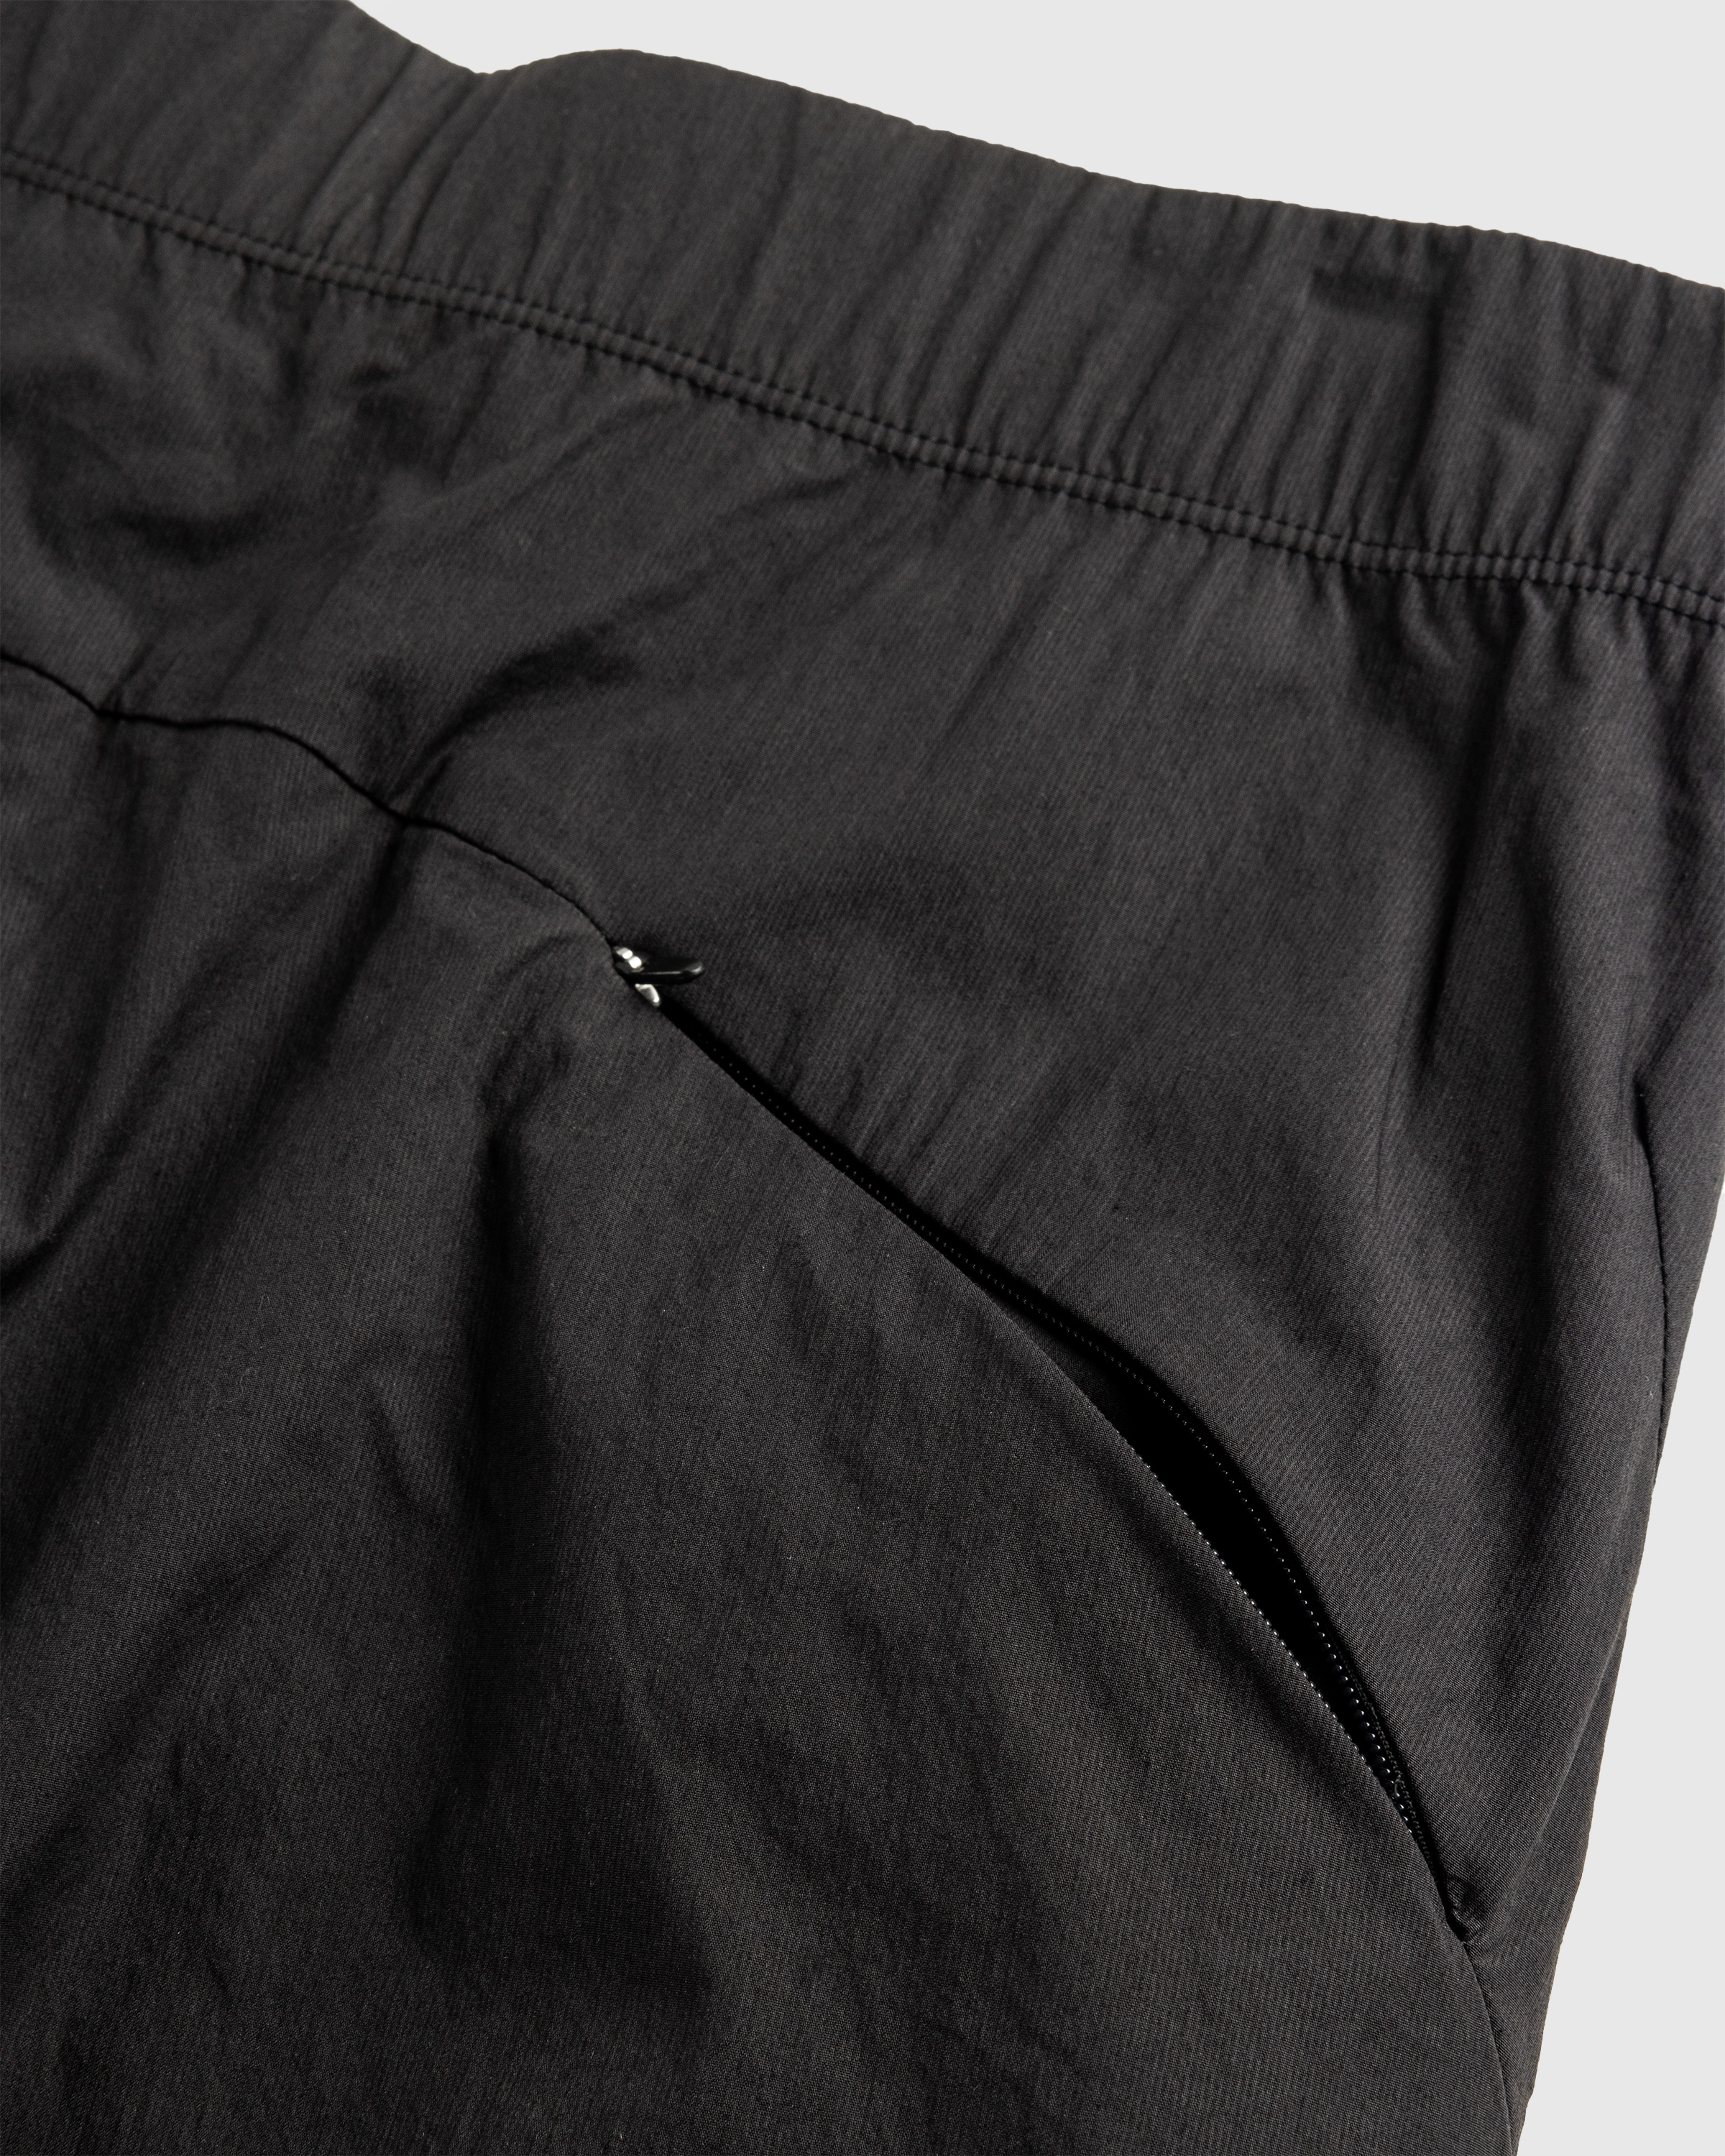 Post Archive Faction (PAF) – 6.0 Technical Pants Center Black - Trousers - Black - Image 6